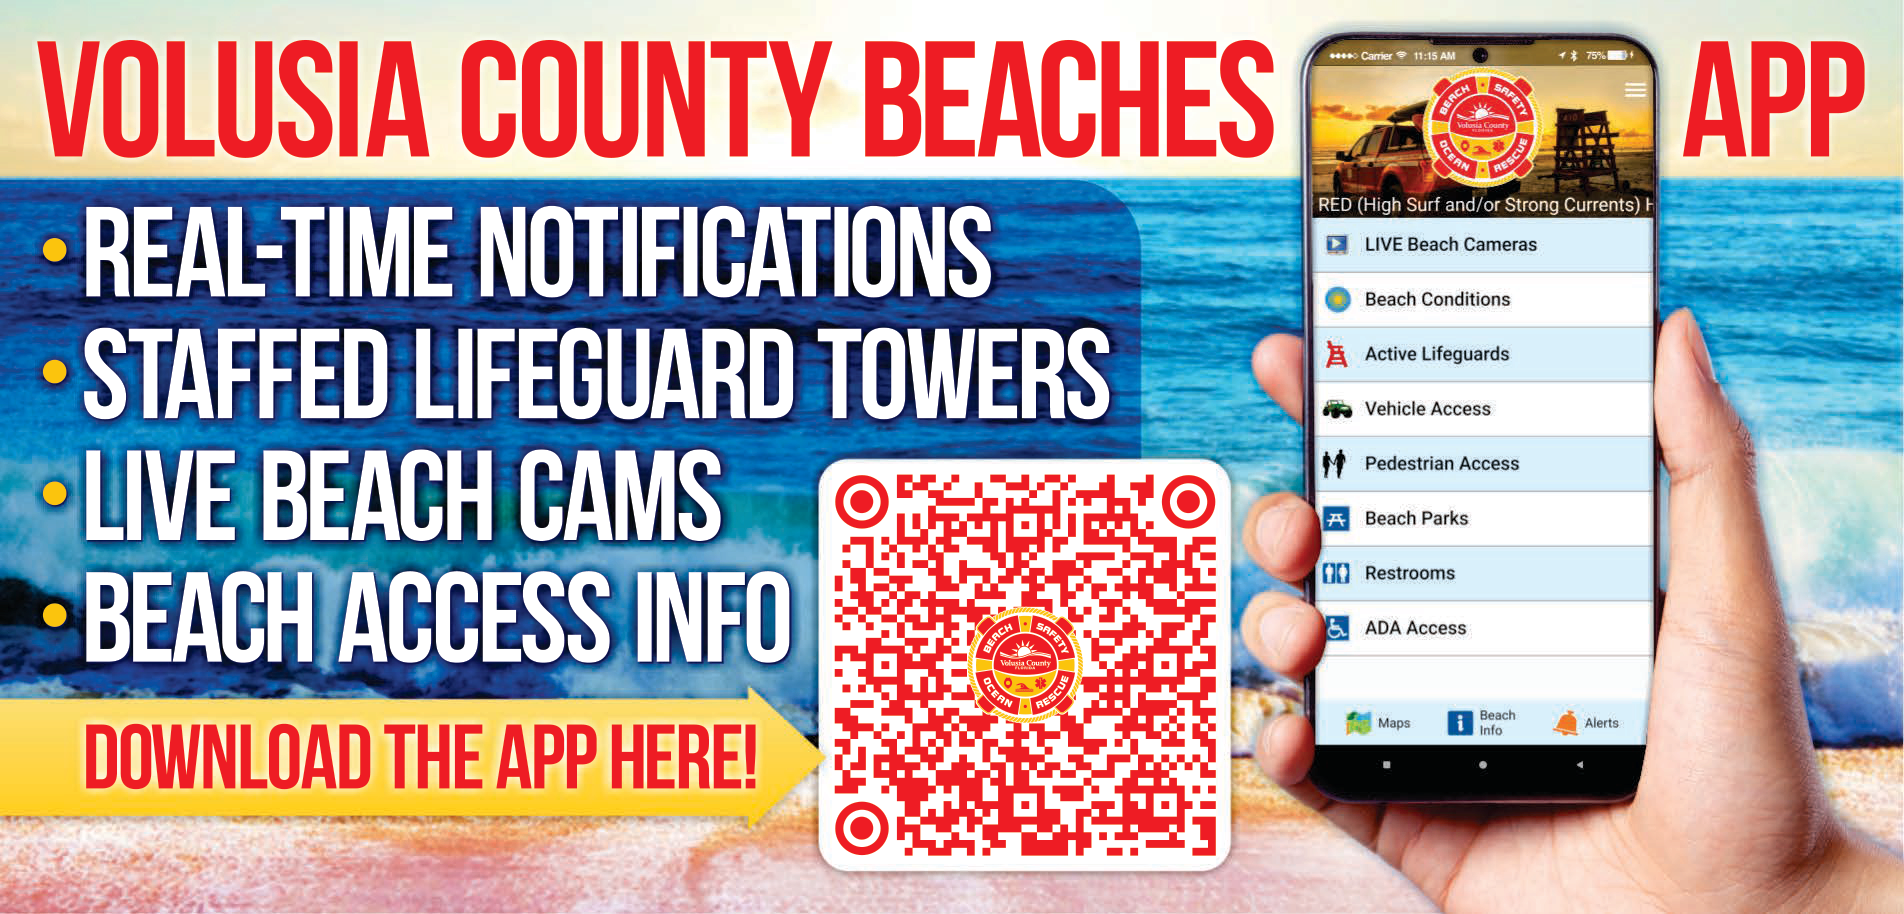 Volusia County Beaches Mobile App Print Ad